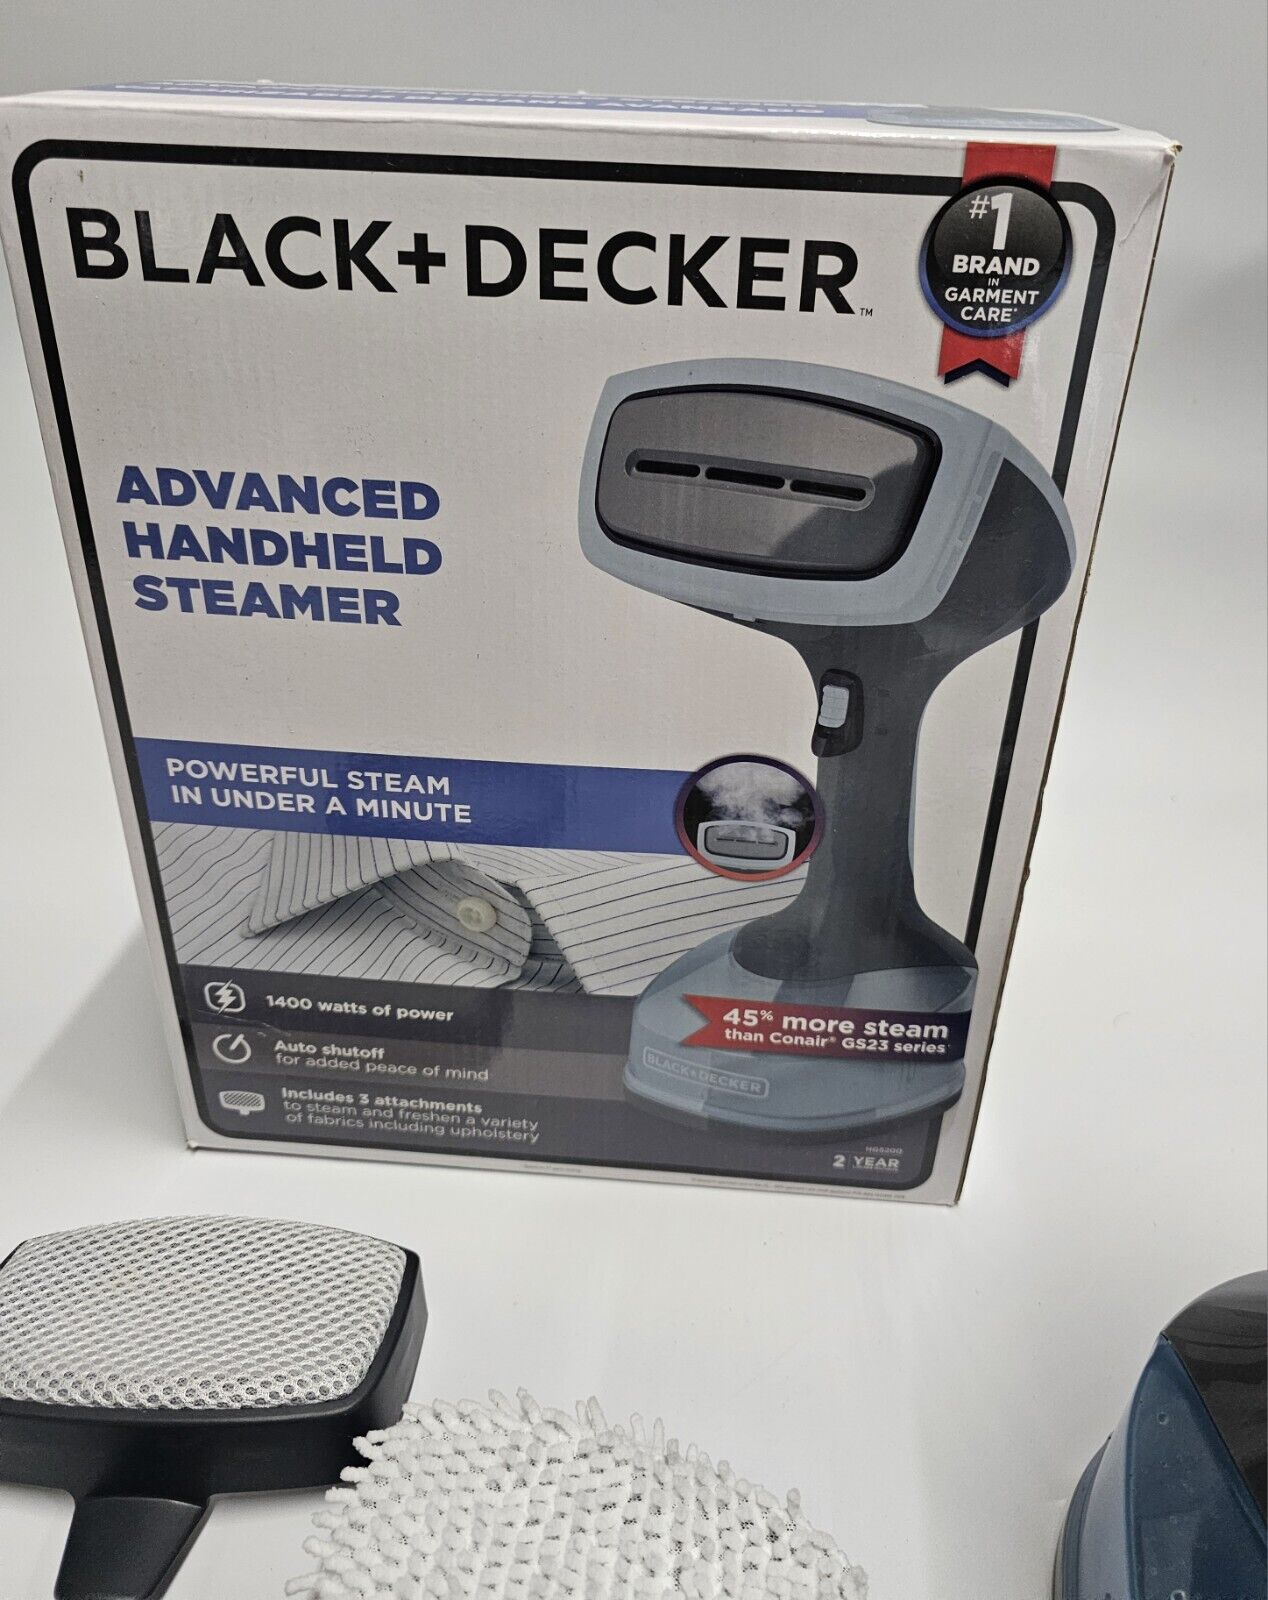 Black+decker Advanced Handheld Steamer Gray/Blue HGS200